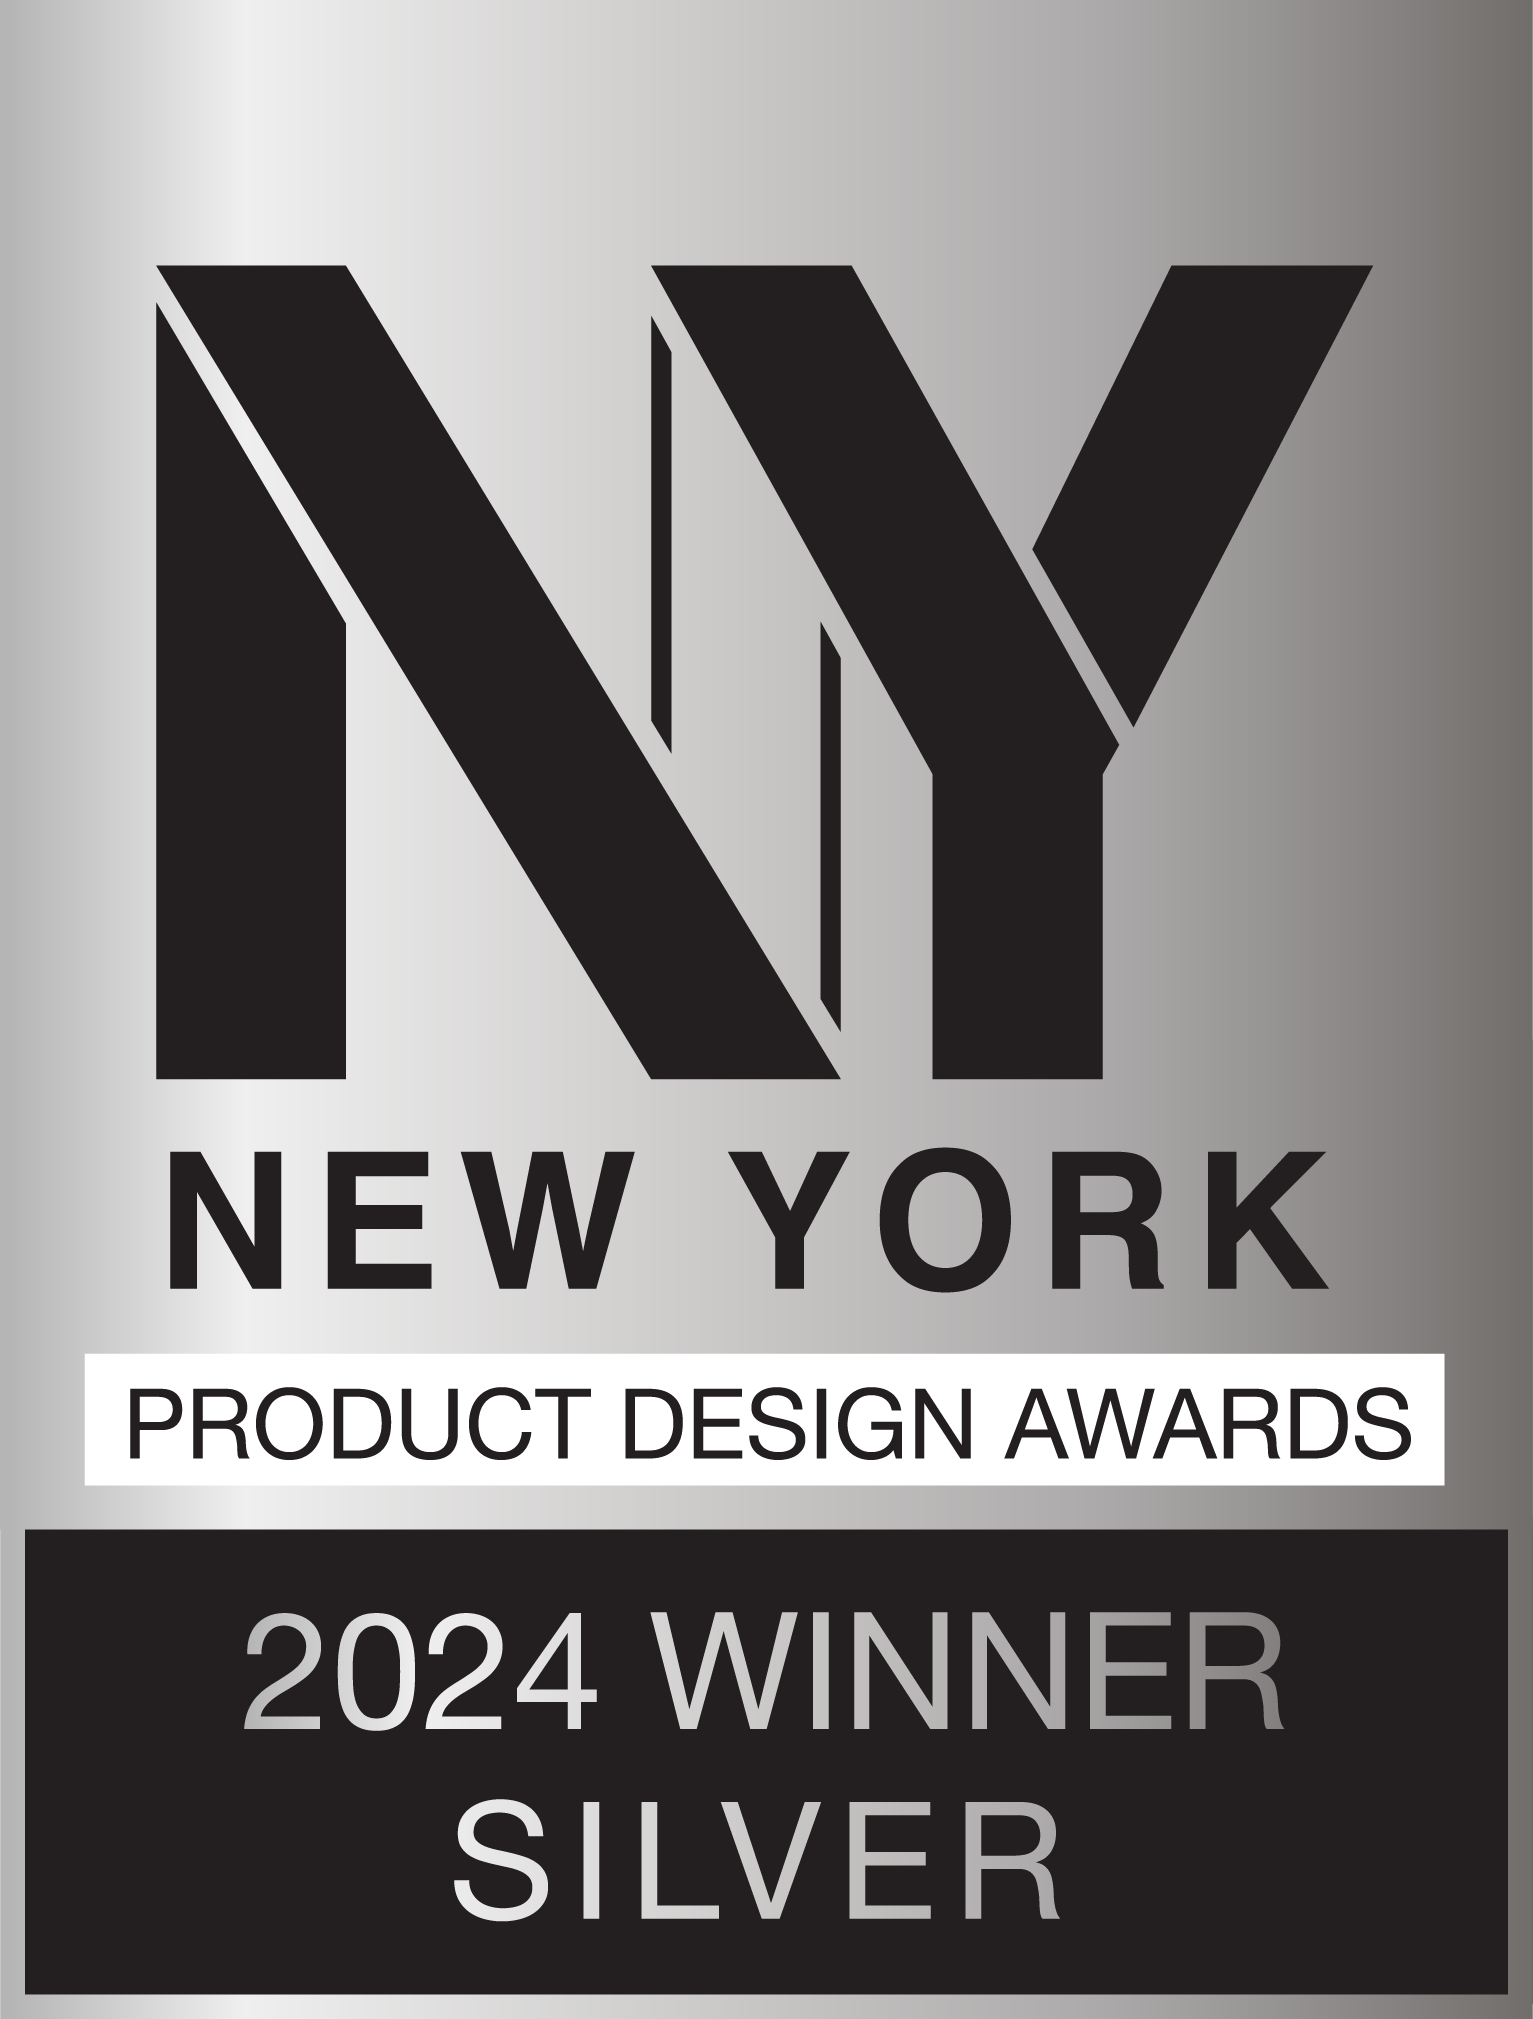 Design Awards Silver Winner - UIJA Intelligent Technology Co., Ltd.